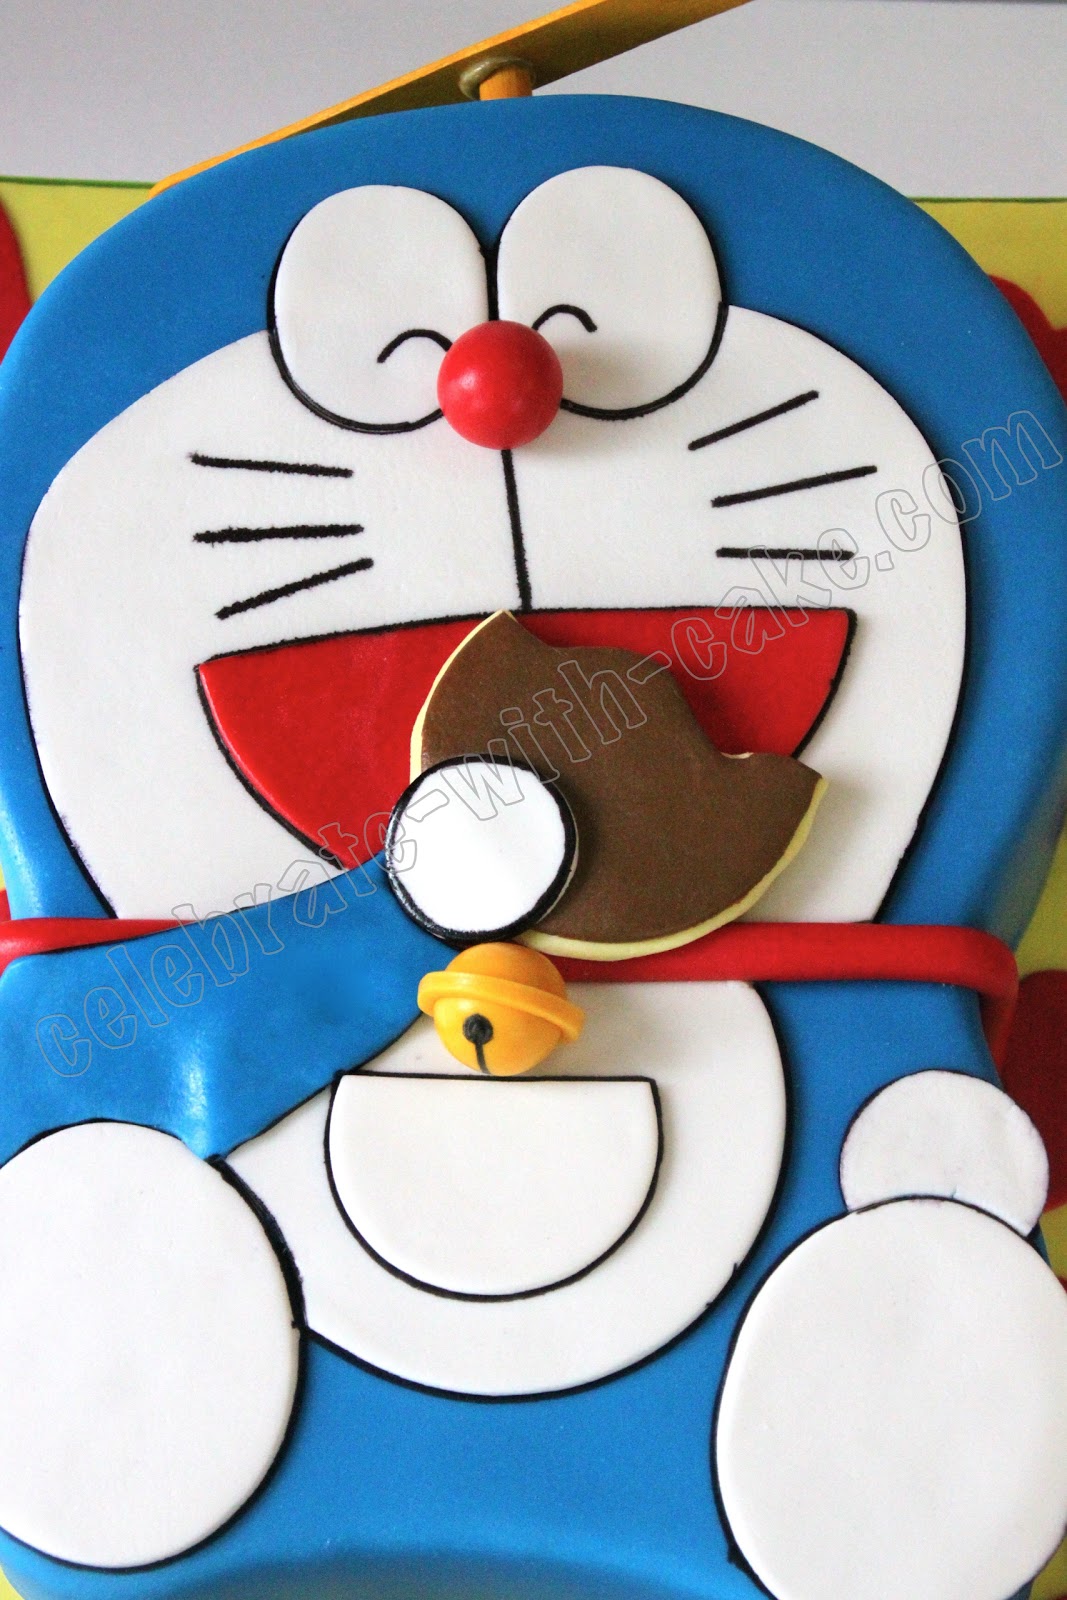 Celebrate with Cake!: Doraemon Cake